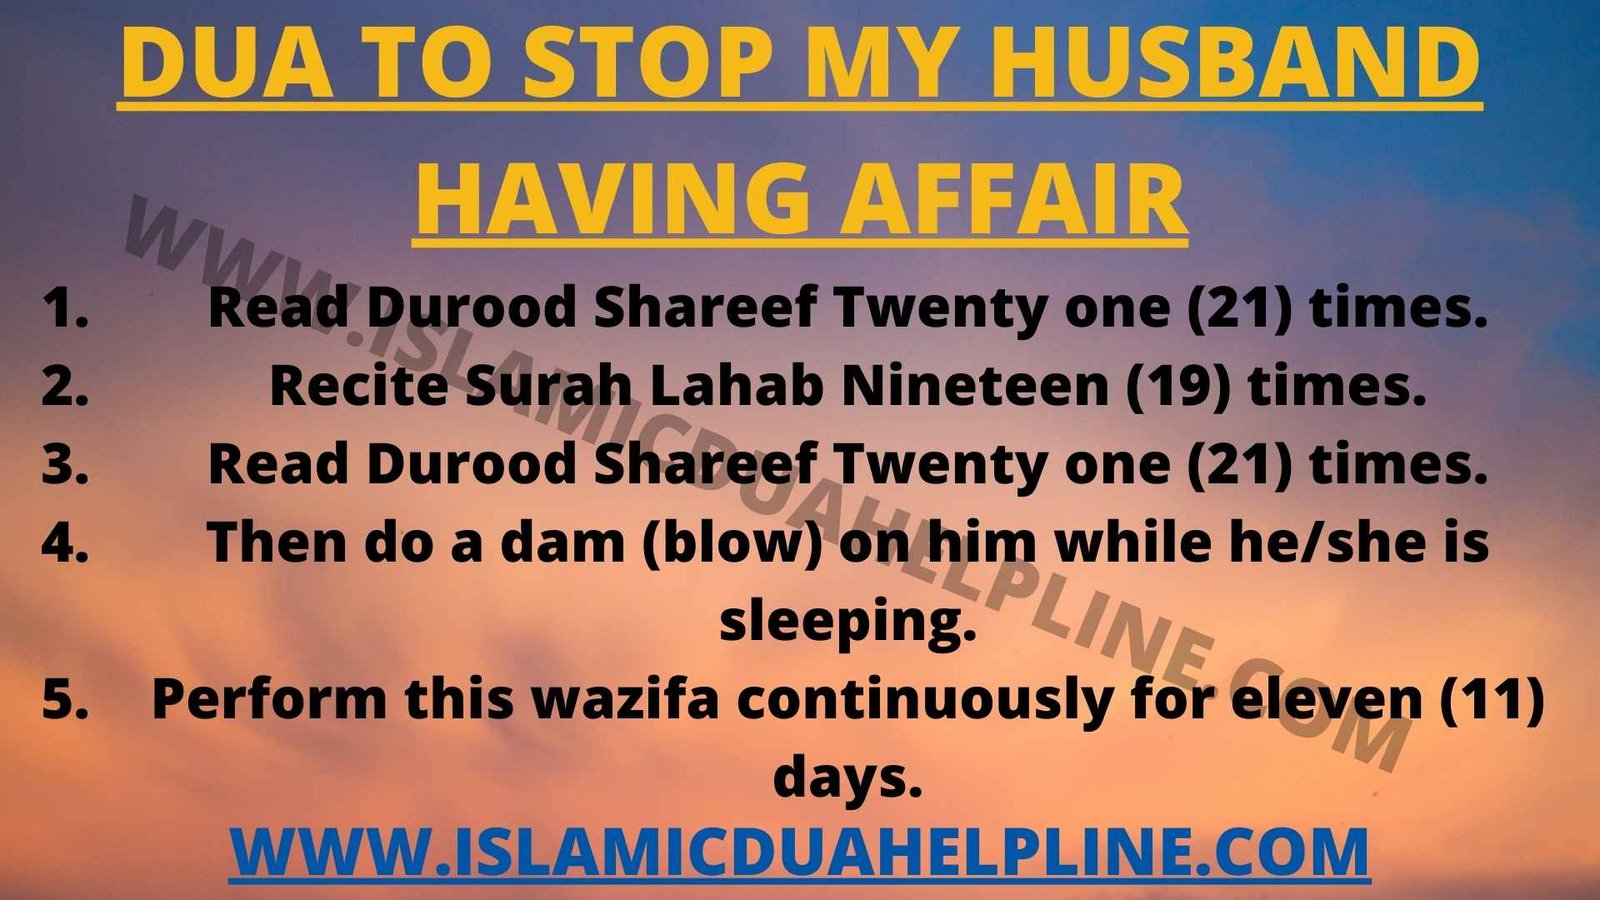 Dua to Stop my Husband having affair